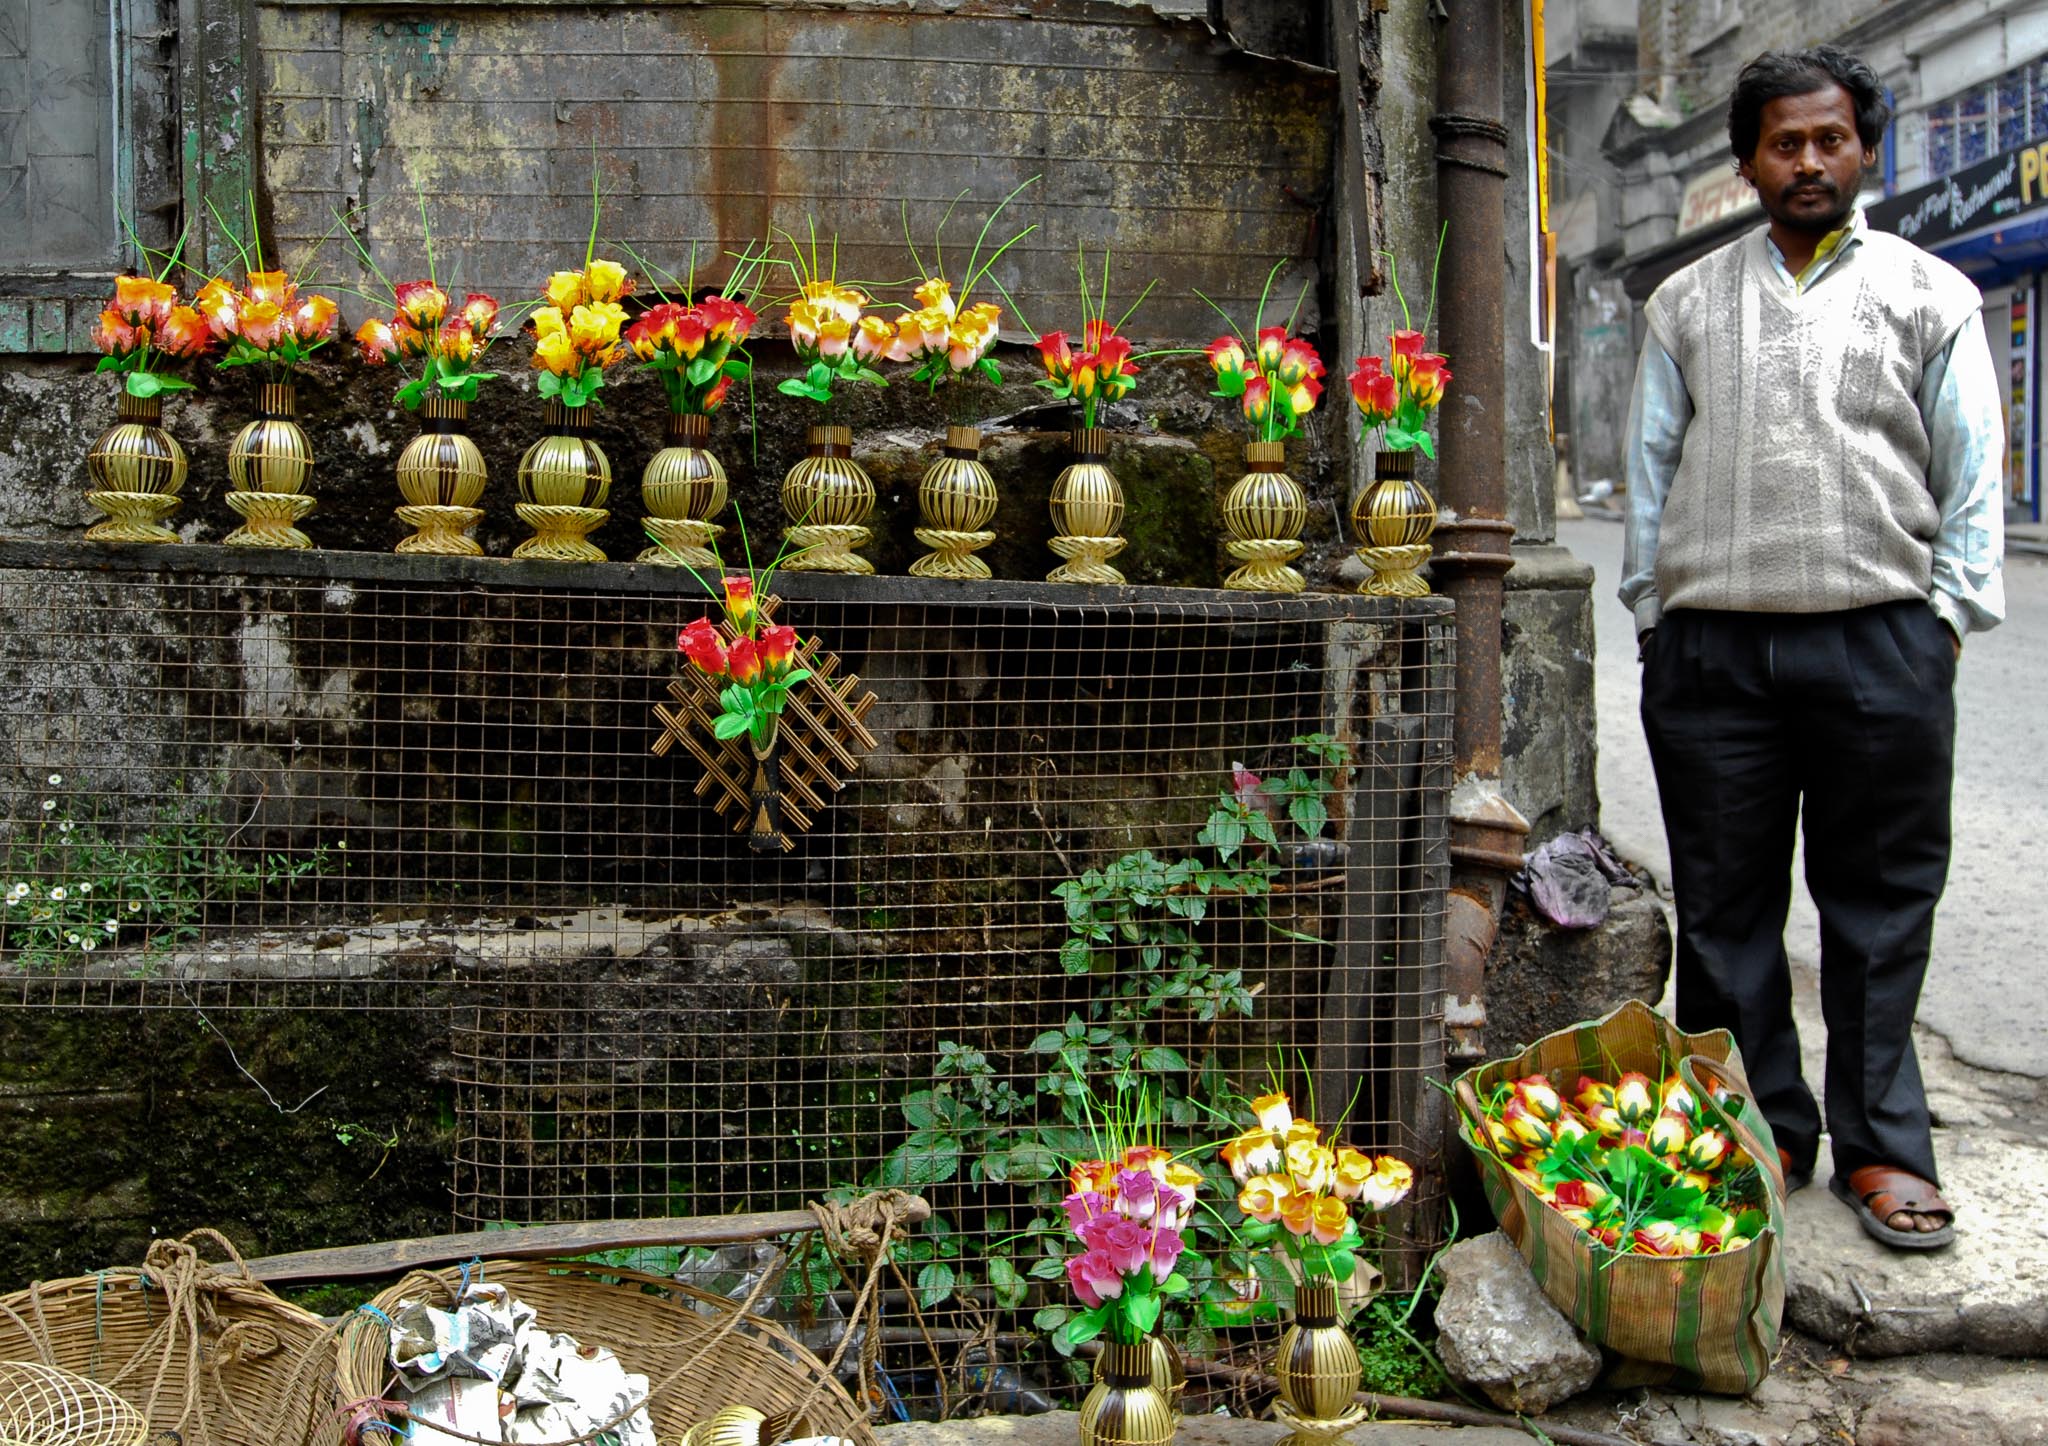 Flower seller, Darjeeling, India